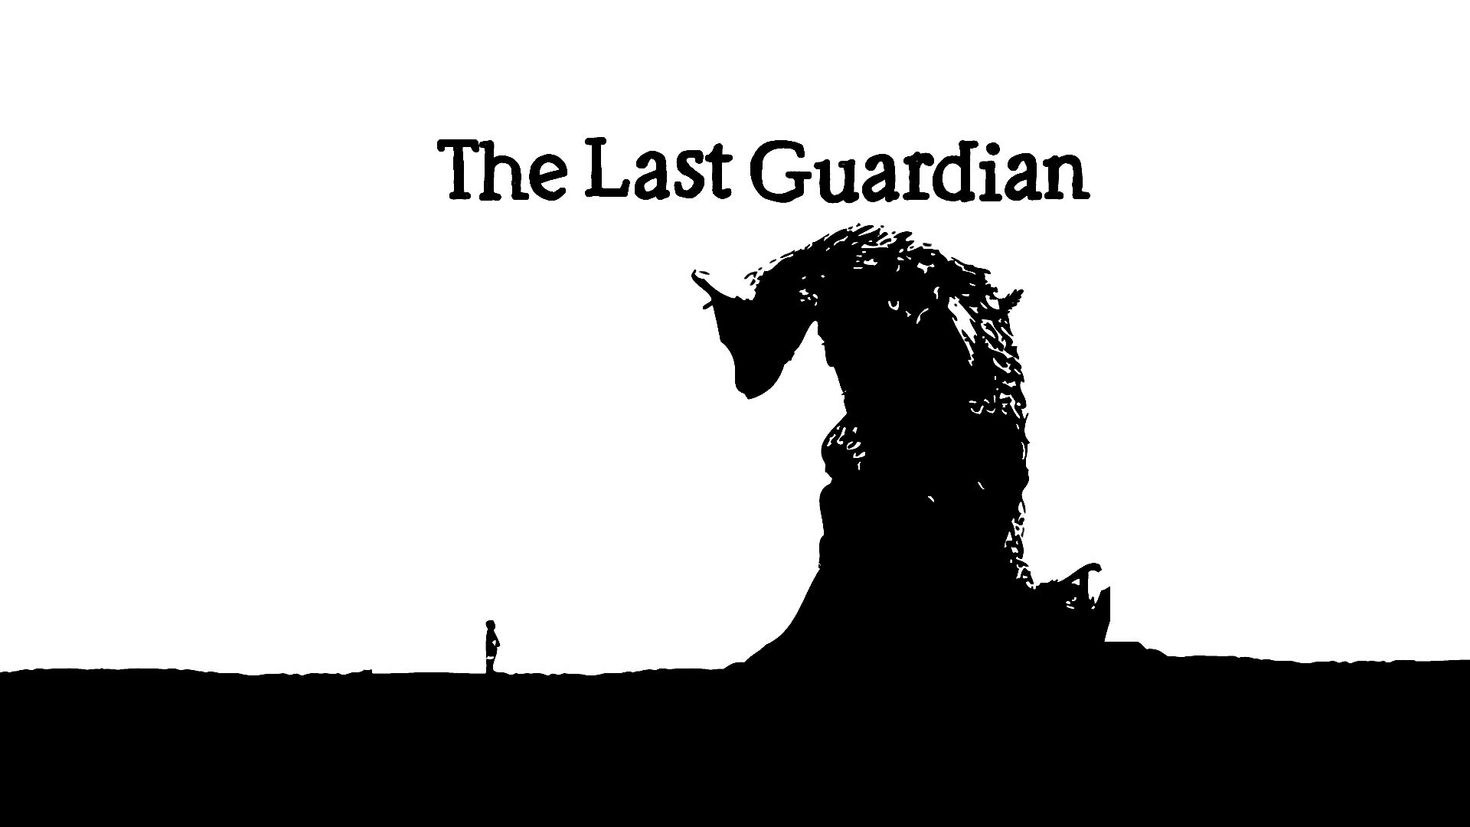 Последний страж том 1 читать. The last Guardian. The last Guardian обложка. The last Guardian последний хранитель лого. The last Guardian Постер.